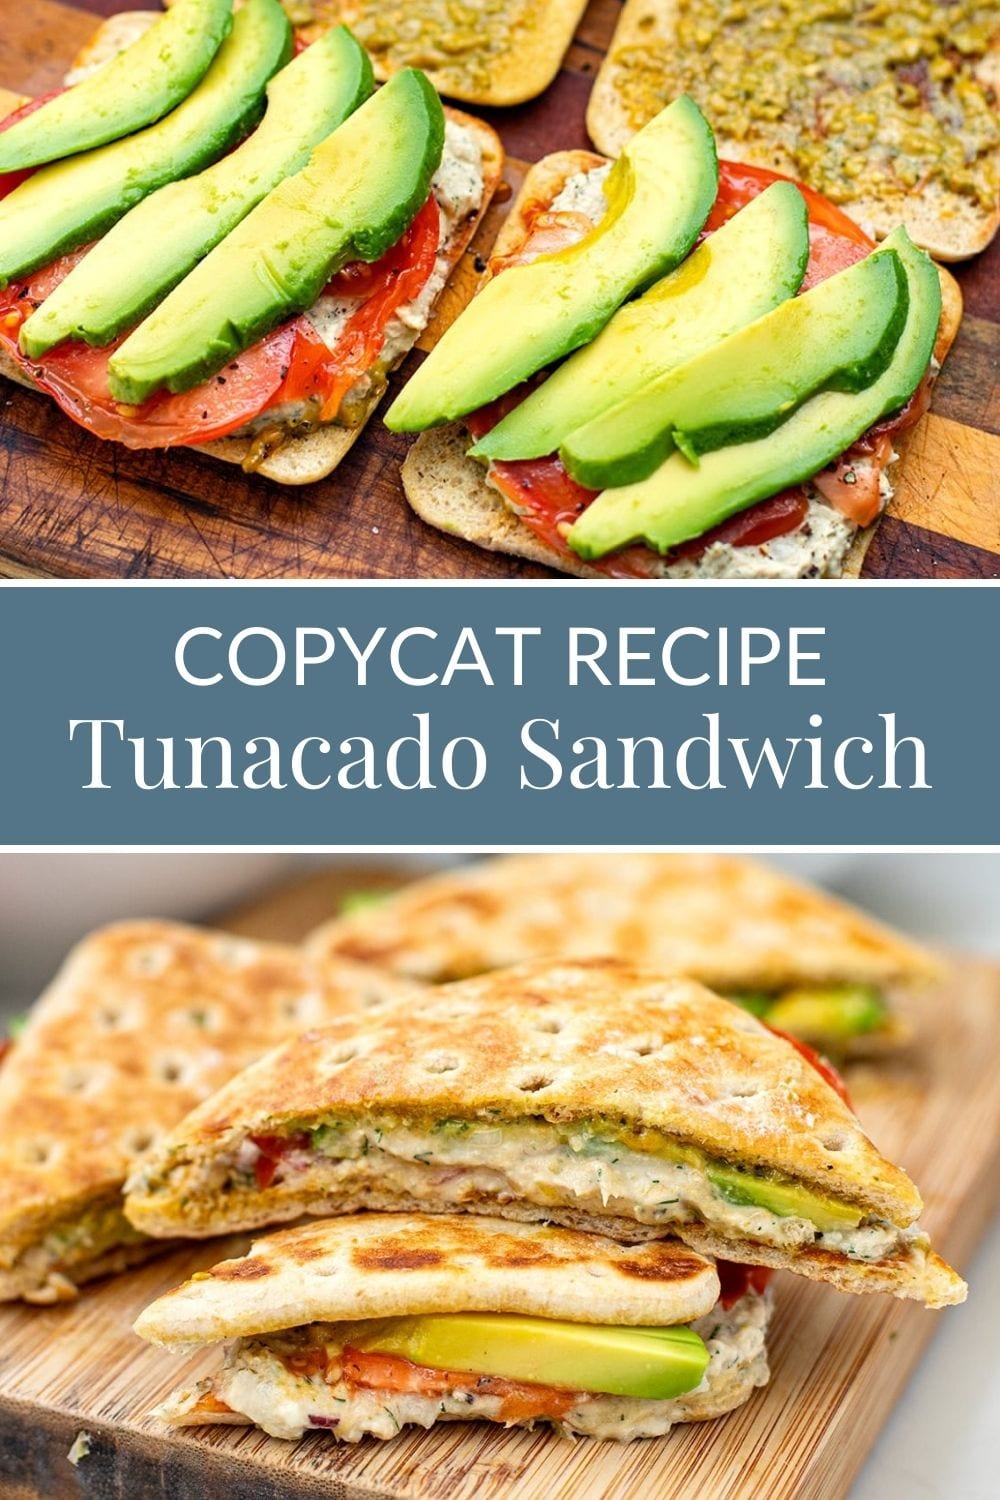 Tunacado Sandwich Recipe